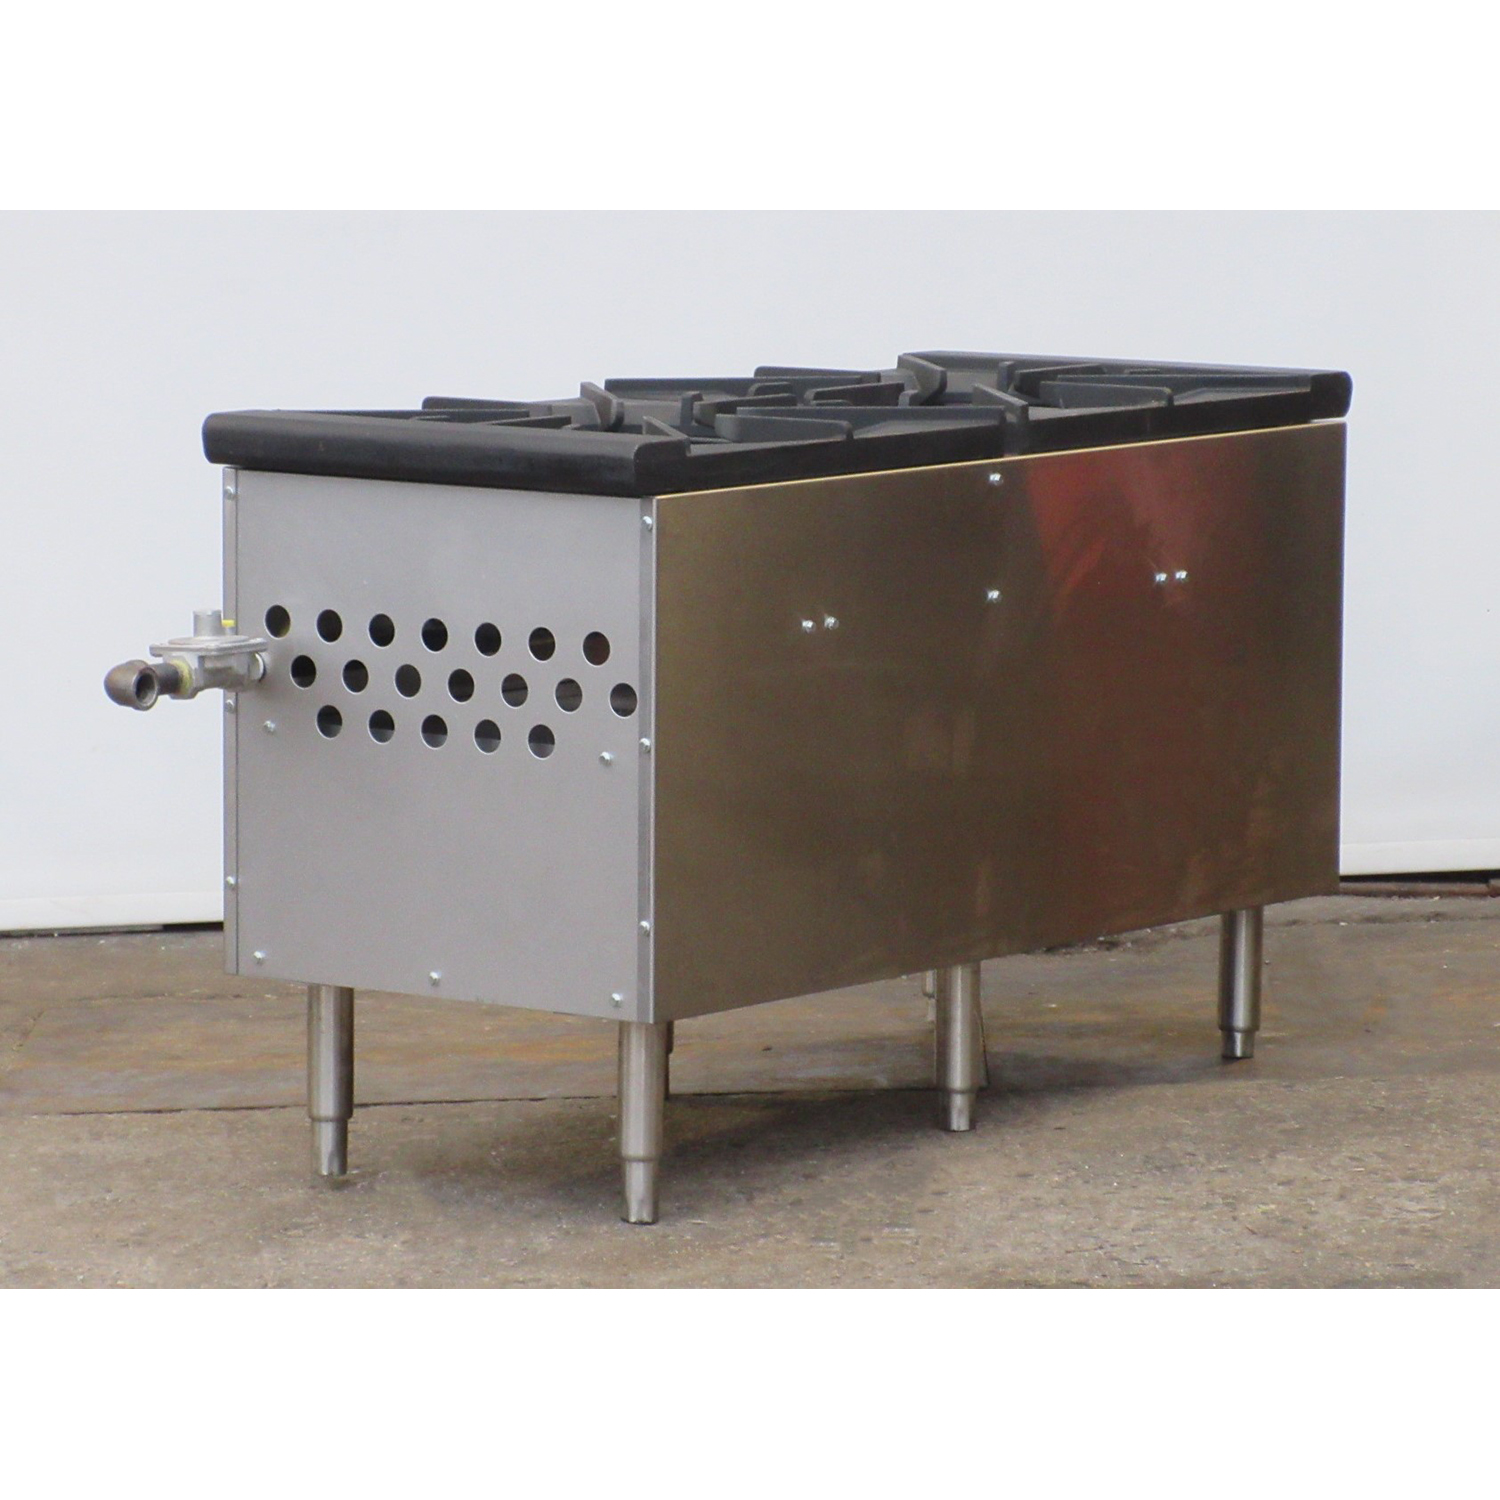 Atosa ATSP-18-2 2-Burner Gas Stock Pot Range, Used Excellent Condition image 3